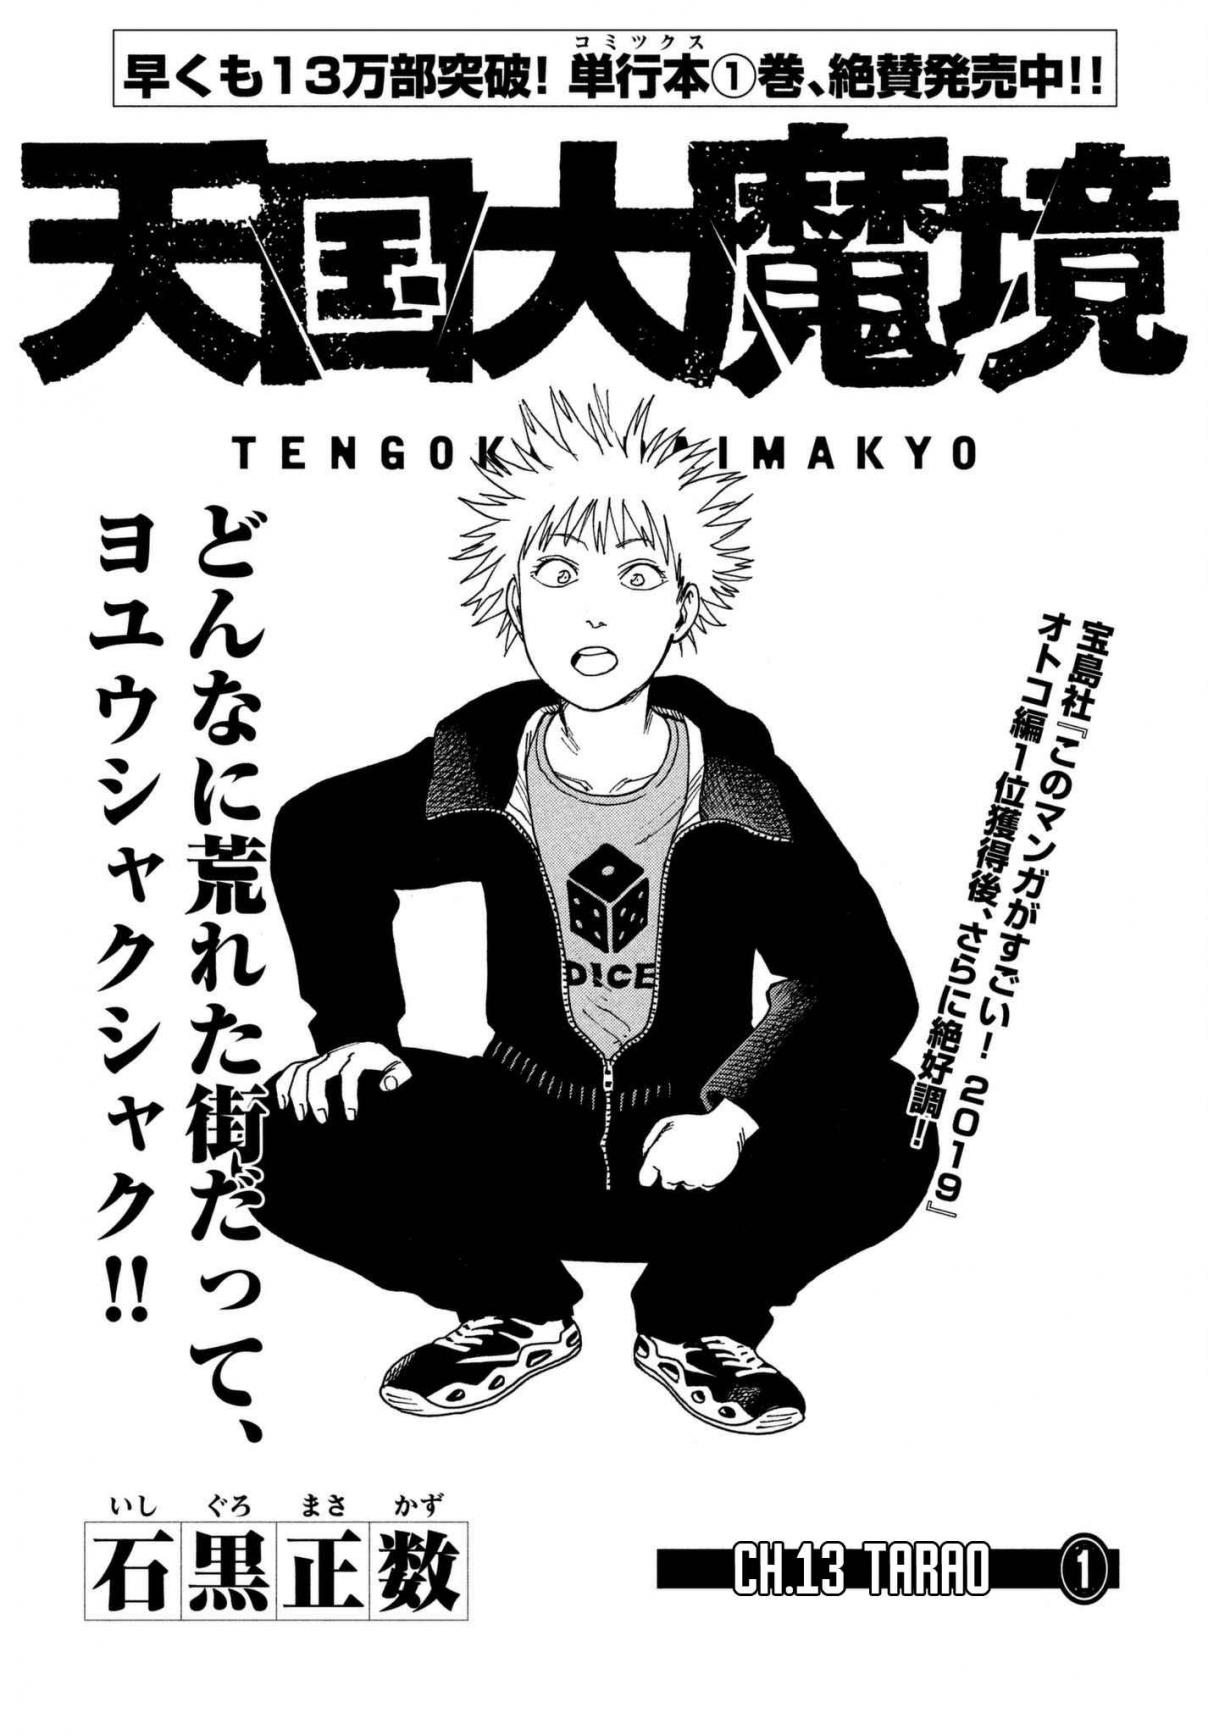 Tengoku Daimakyou Ch. 13 Tarao ①